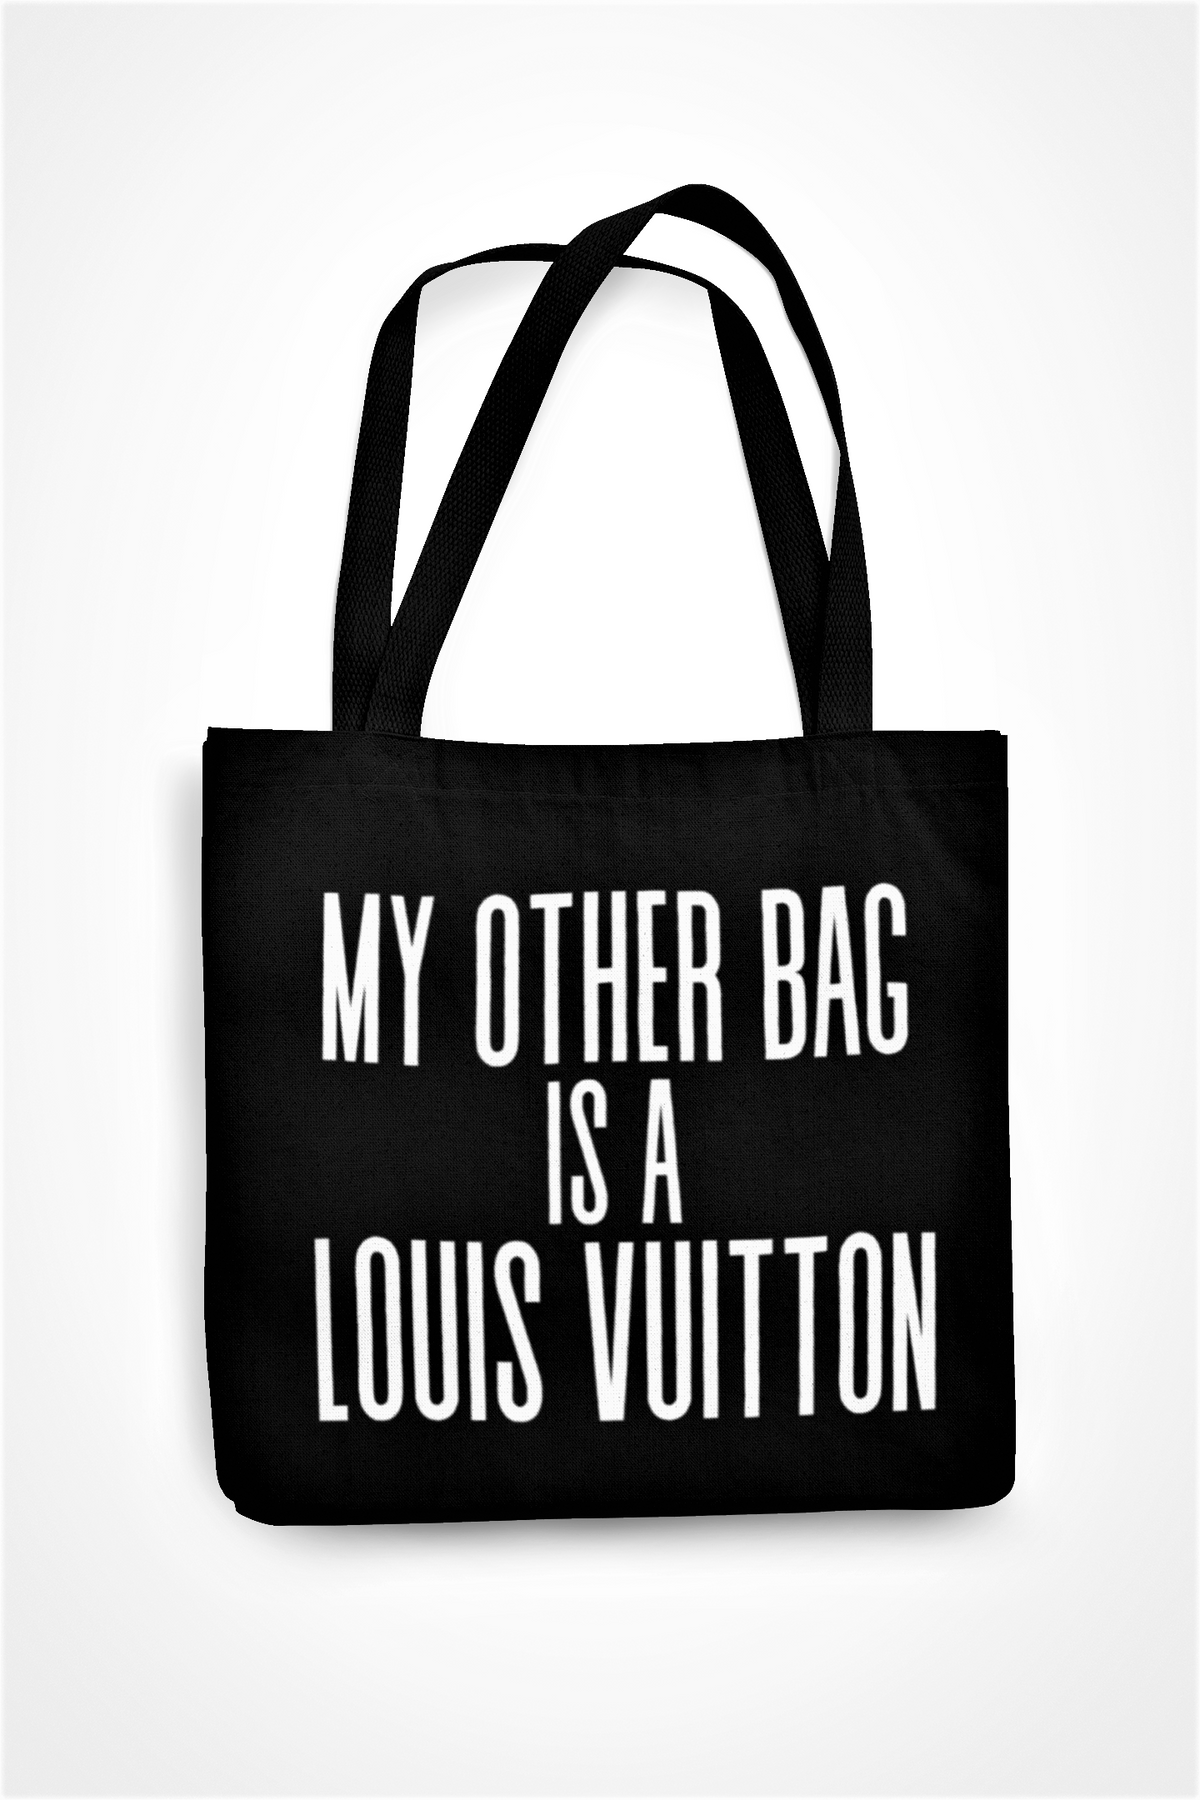 Other Bag Is A Louis Vuitton — Risky T's